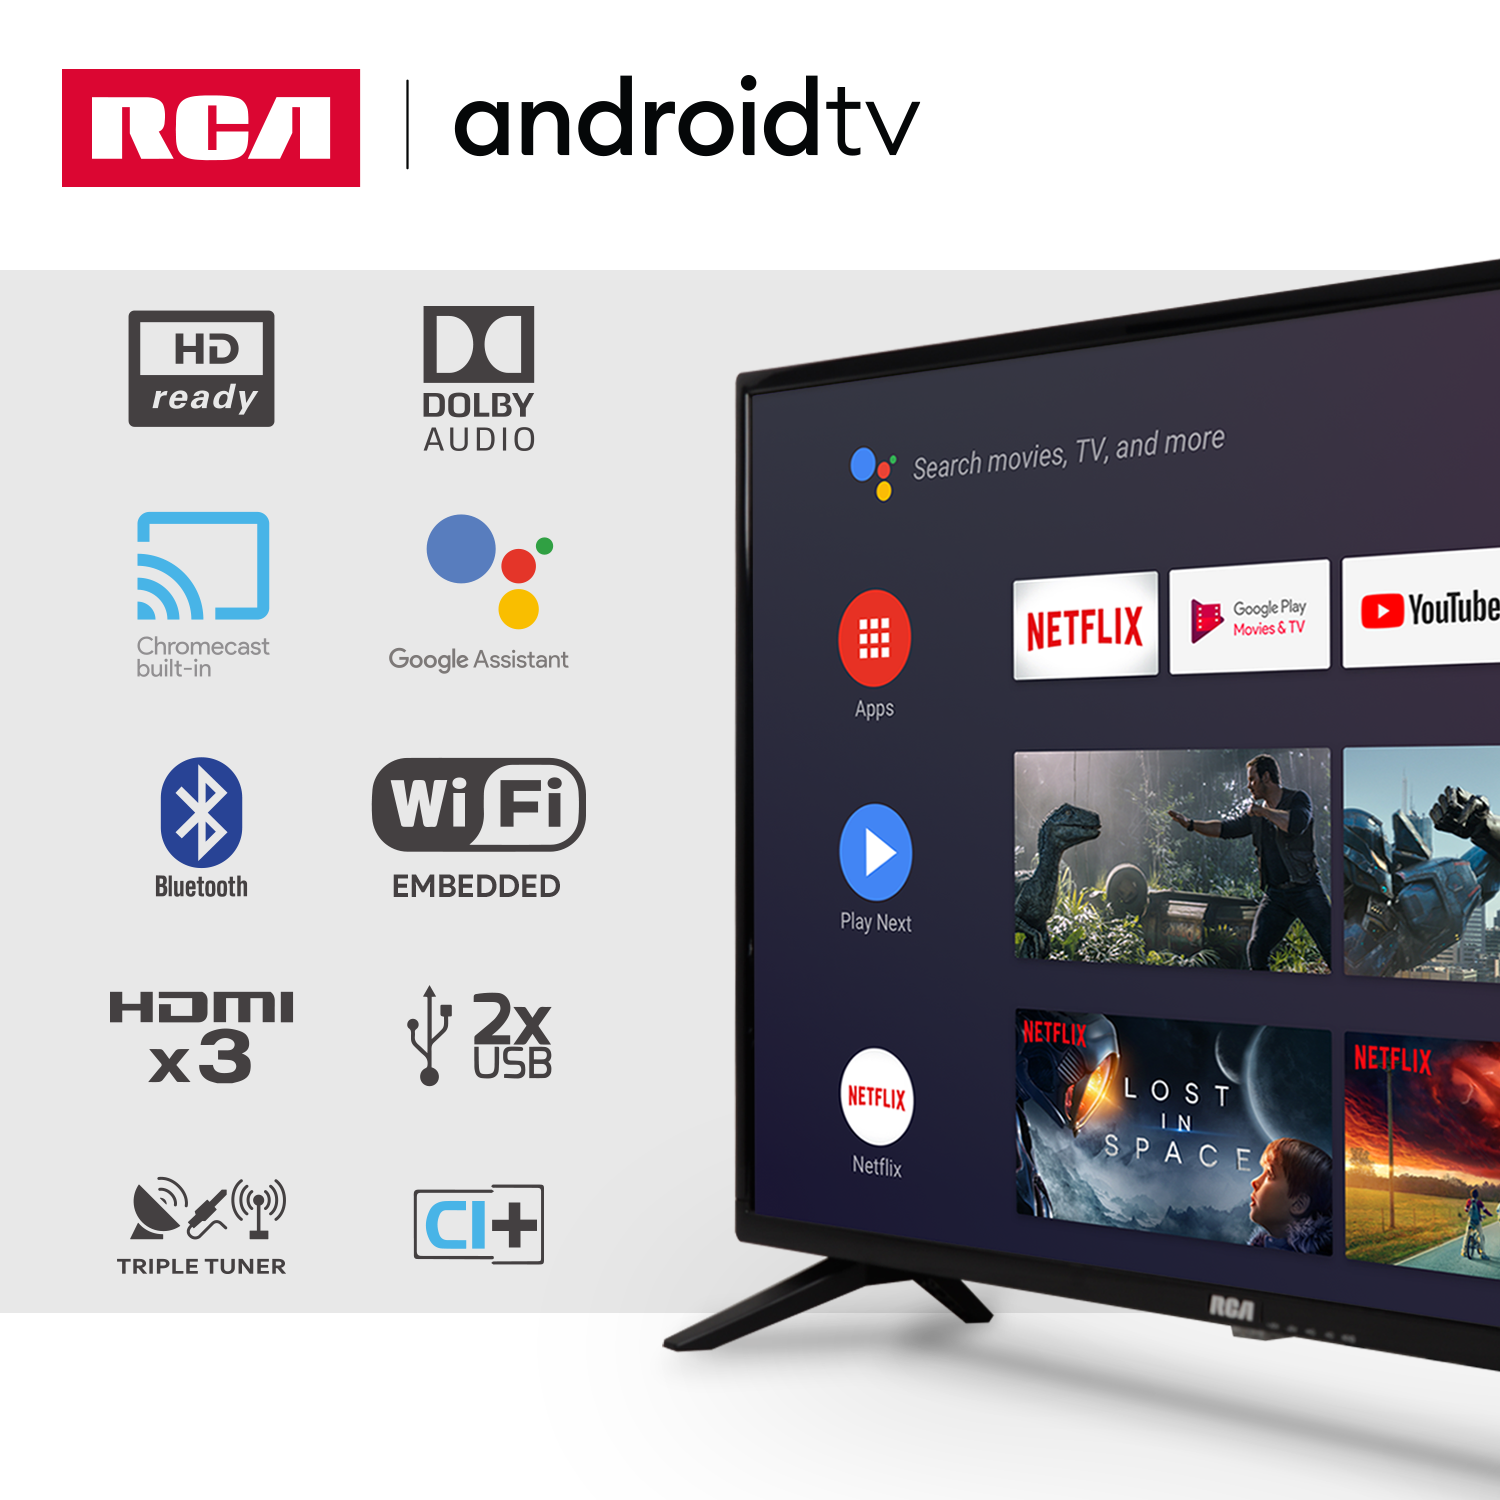 Rca Rs32h2 Eu 32 Inch Hd Ready Android Smart Led Tv Rca Com Hkc Europe B V